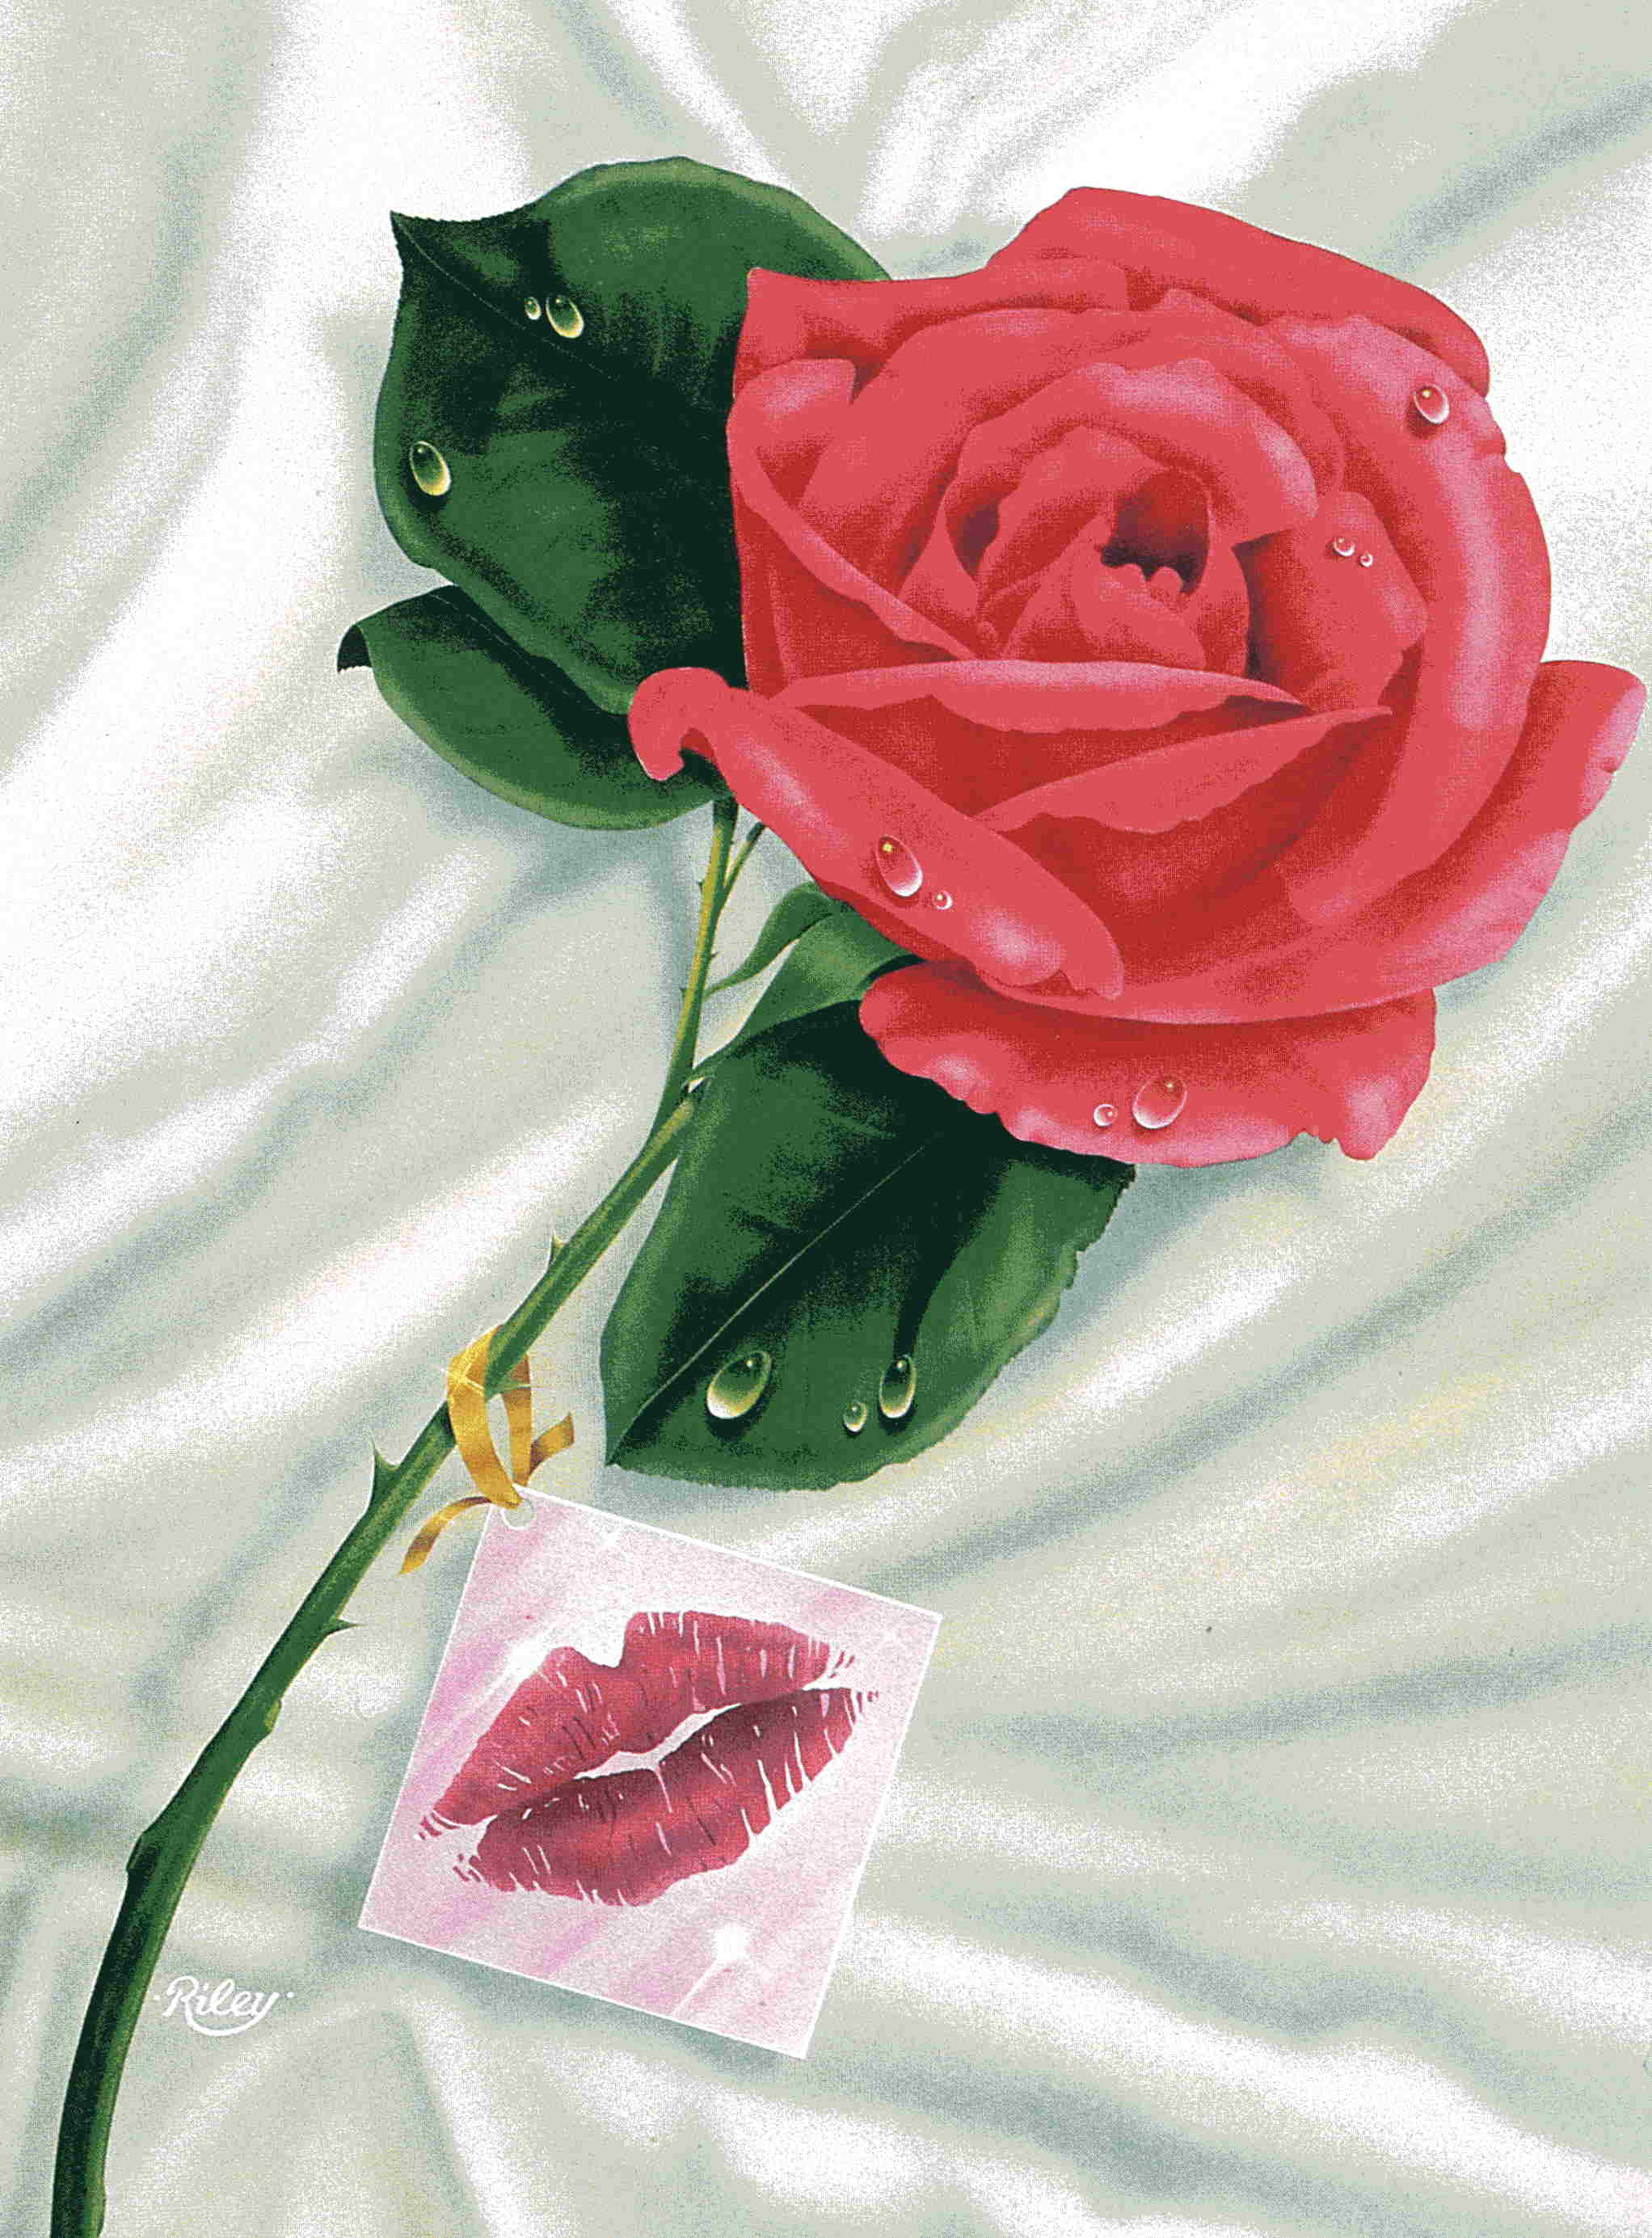 frank-riley-love-rose.jpg